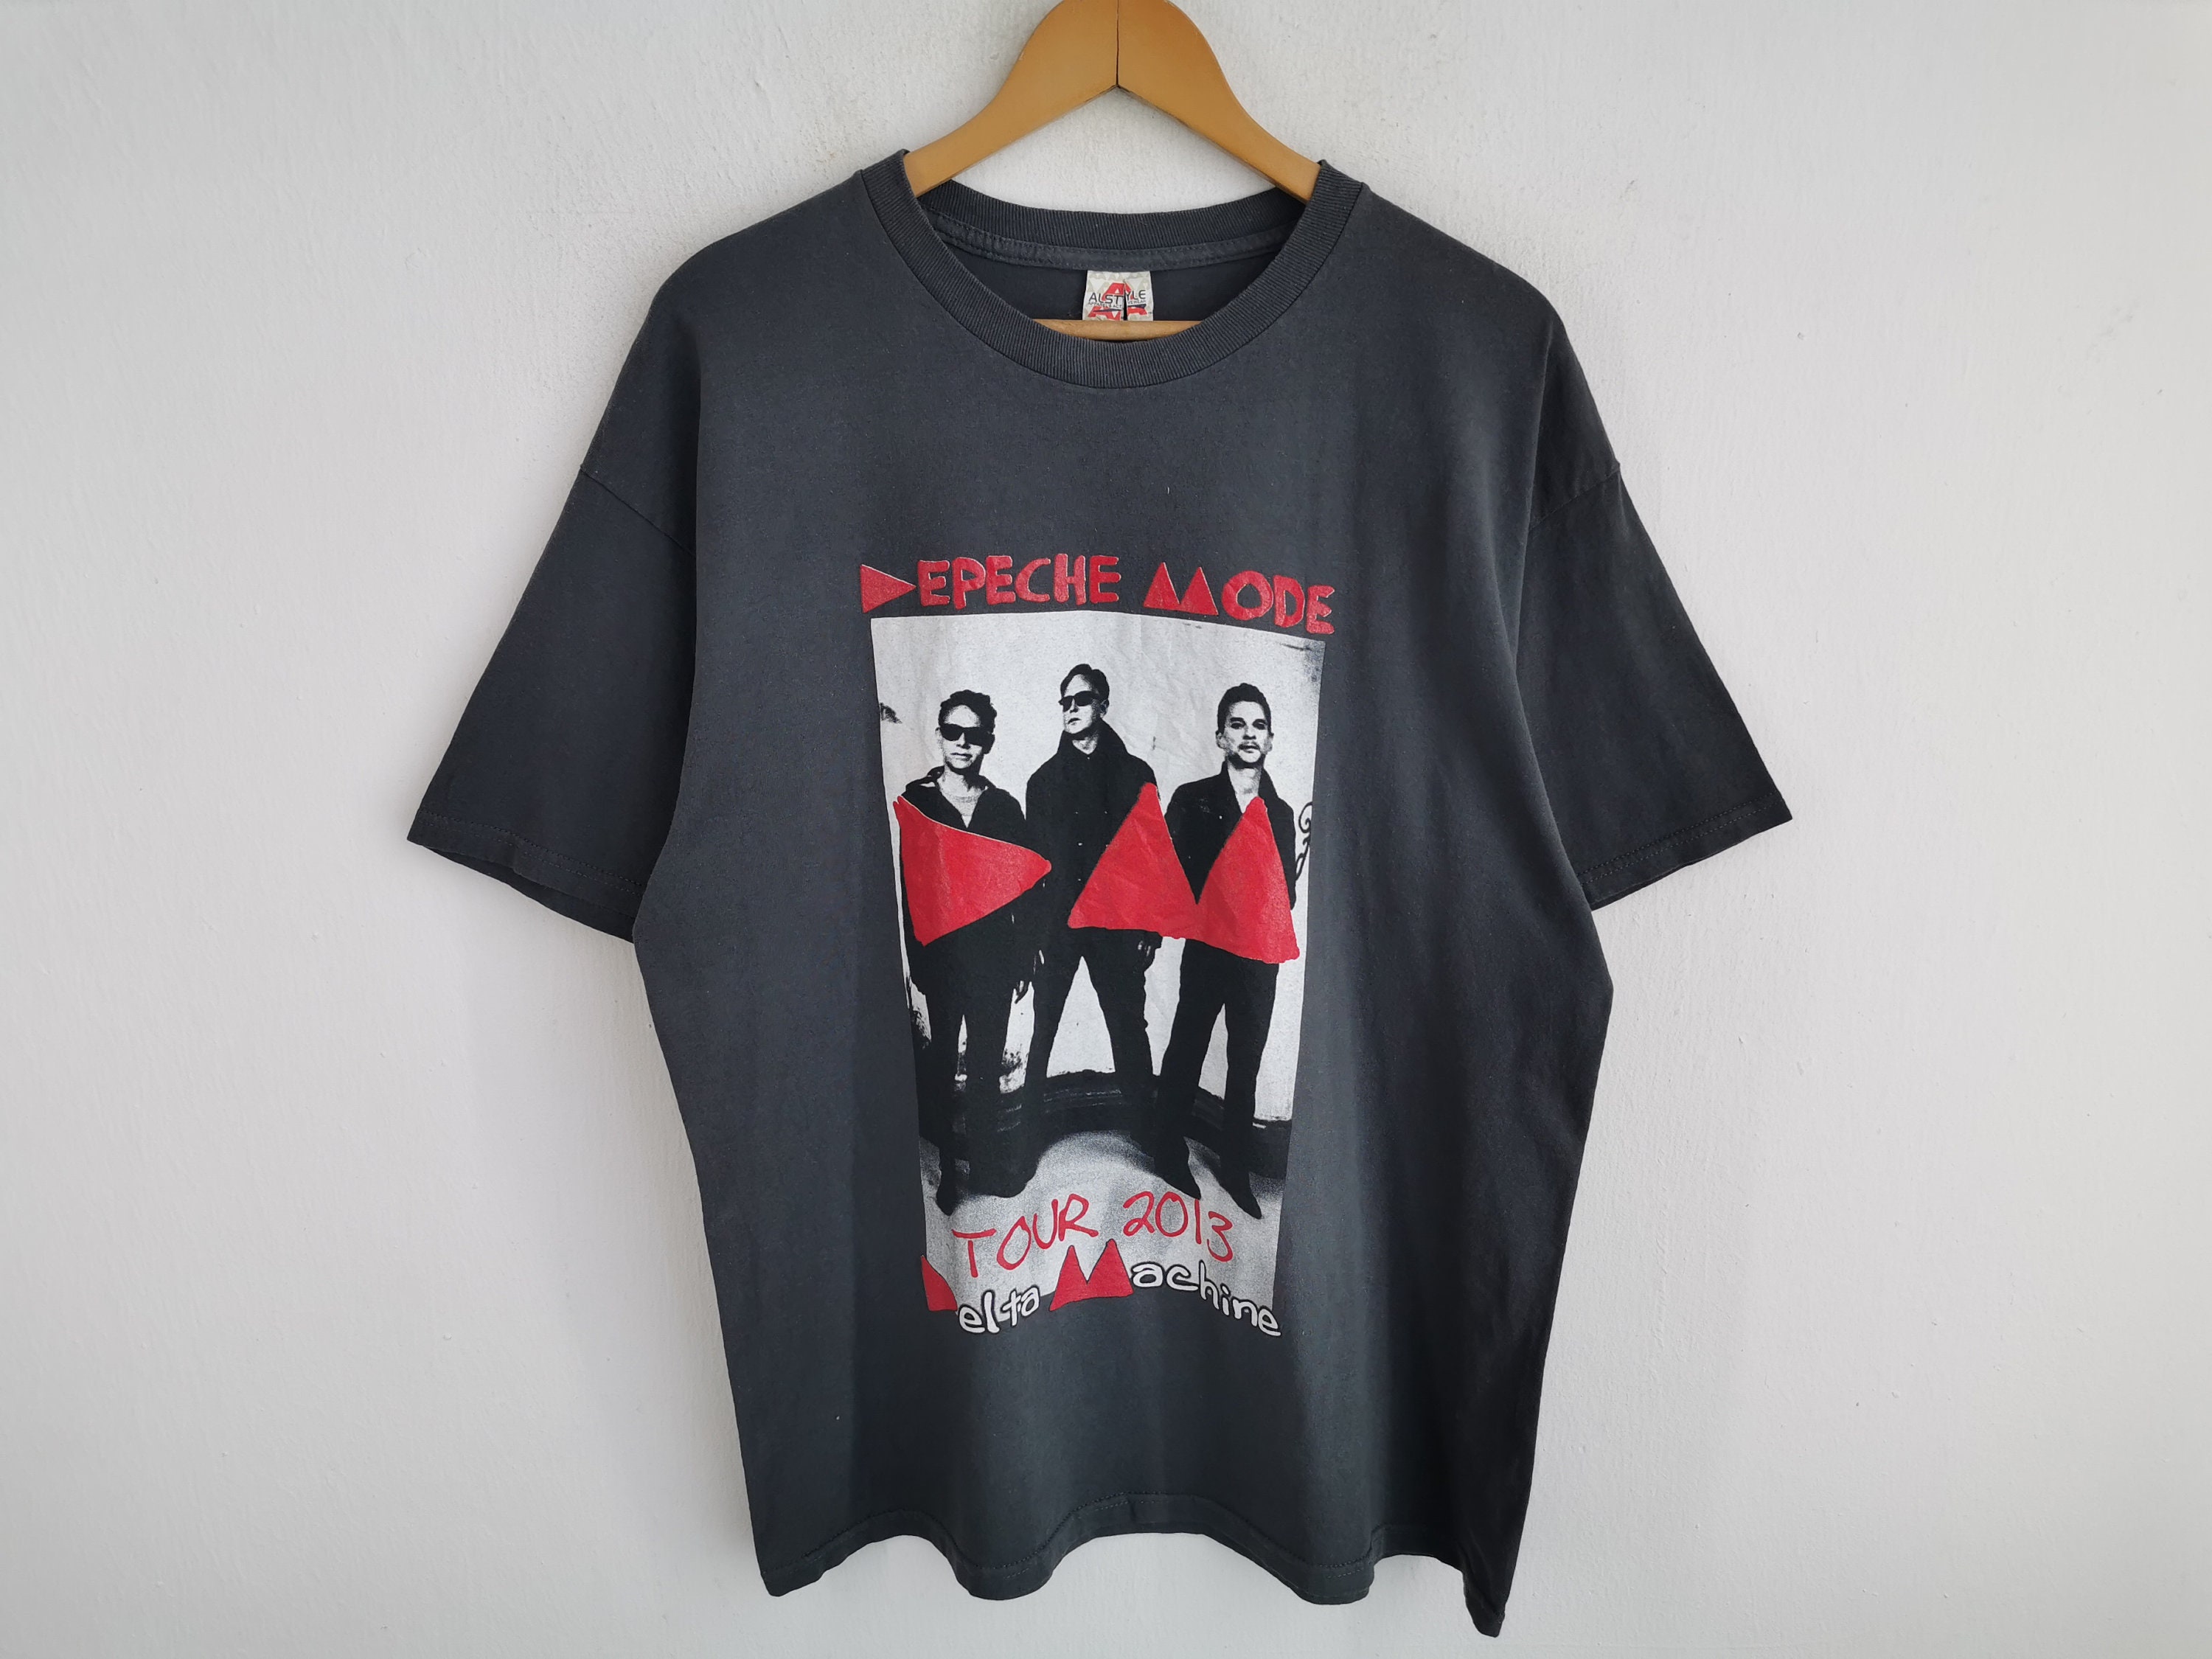 Depeche Mode Shirt Vintage s Depeche Mode American Band   Etsy